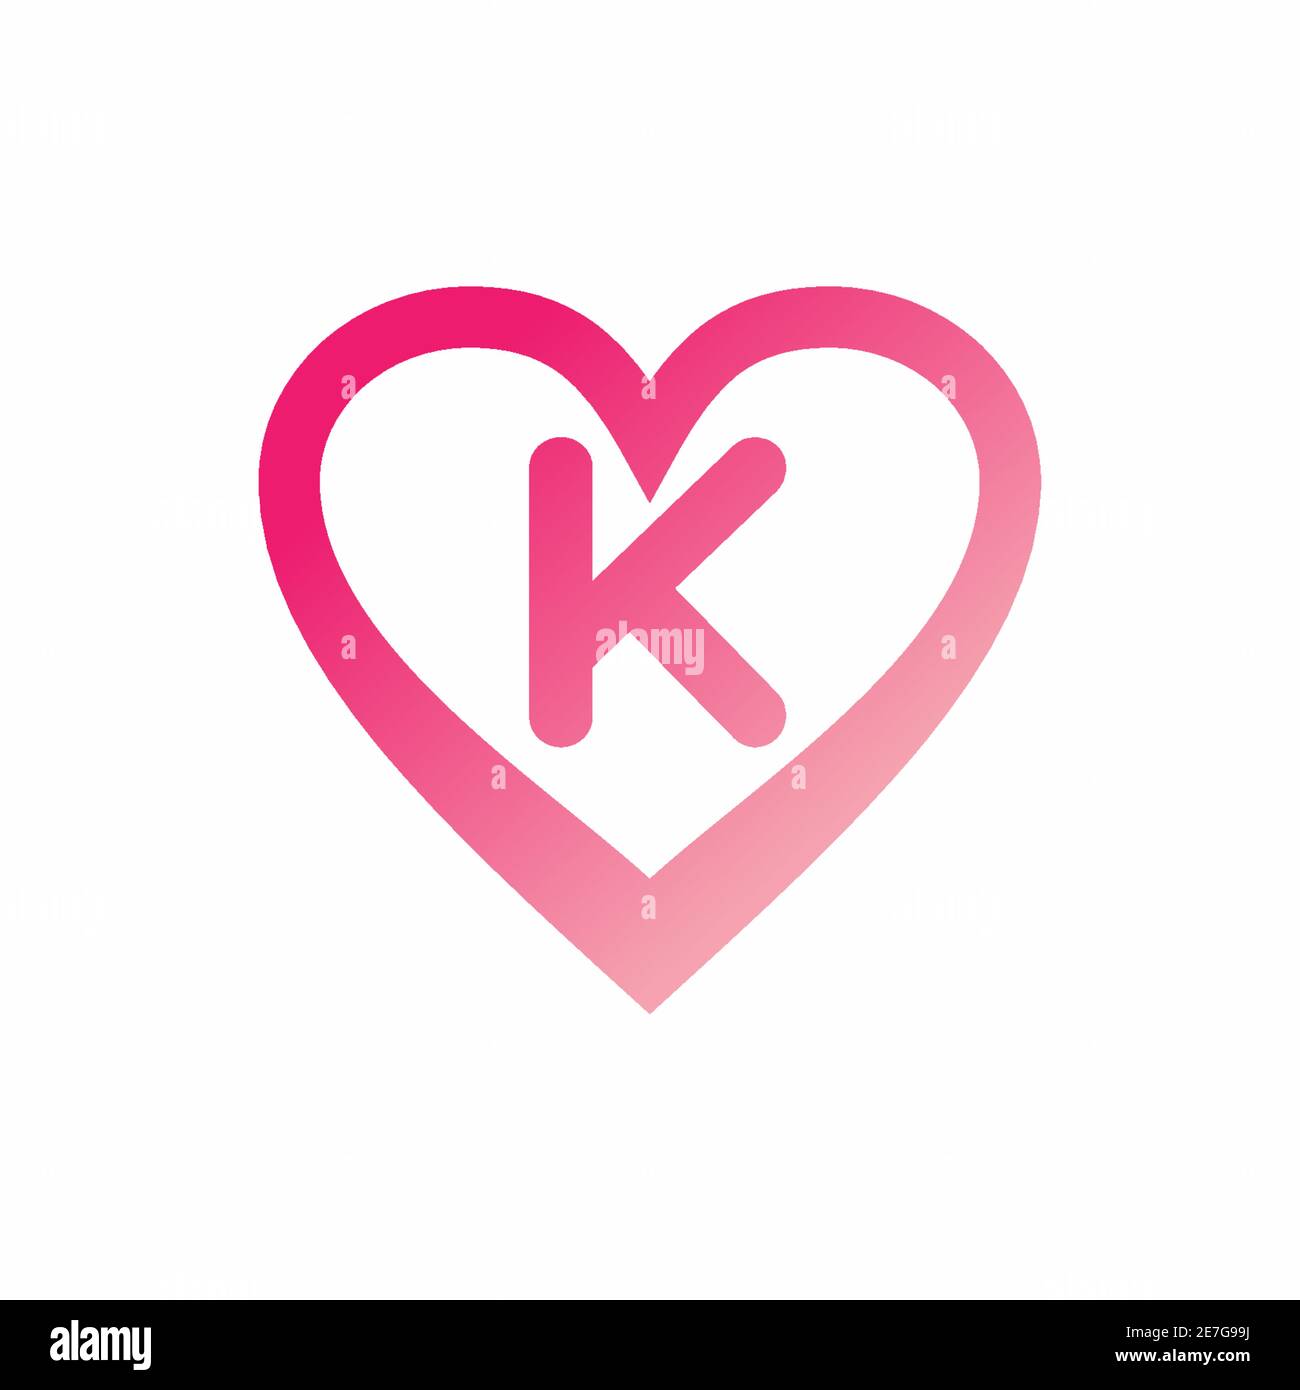 K letter in pink love sign logo design Stock Vector Image & Art ...